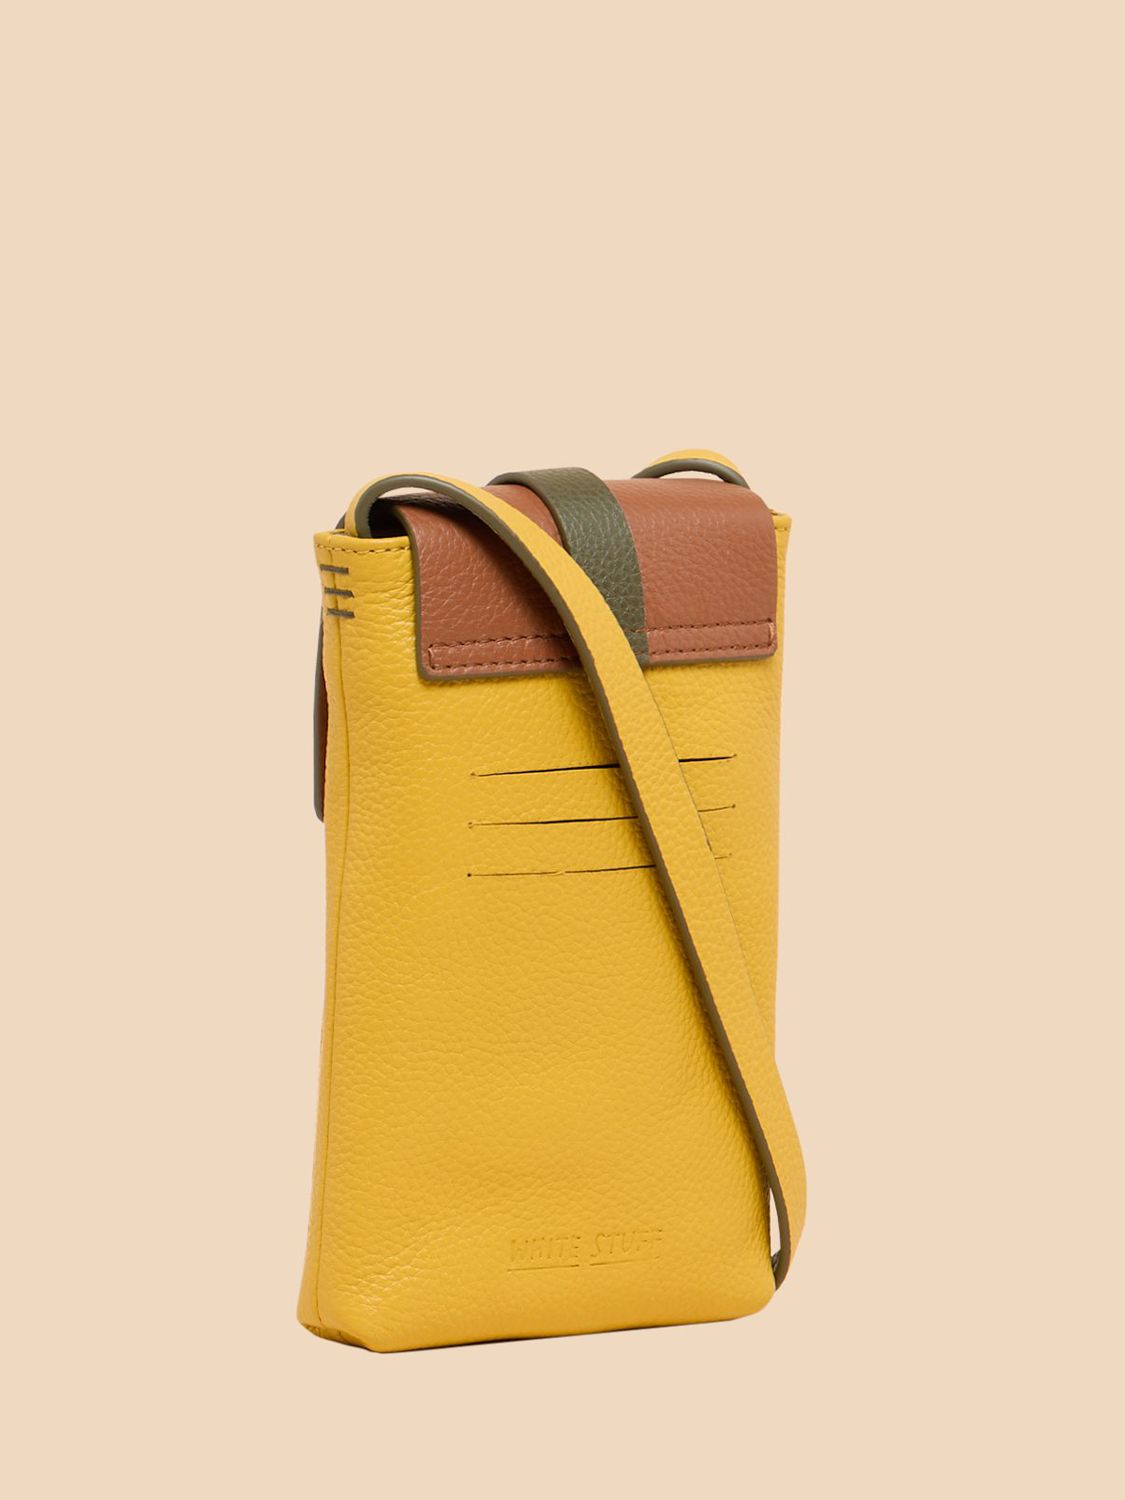 White Stuff Leather Phone Bag, Yellow/Multi, One Size